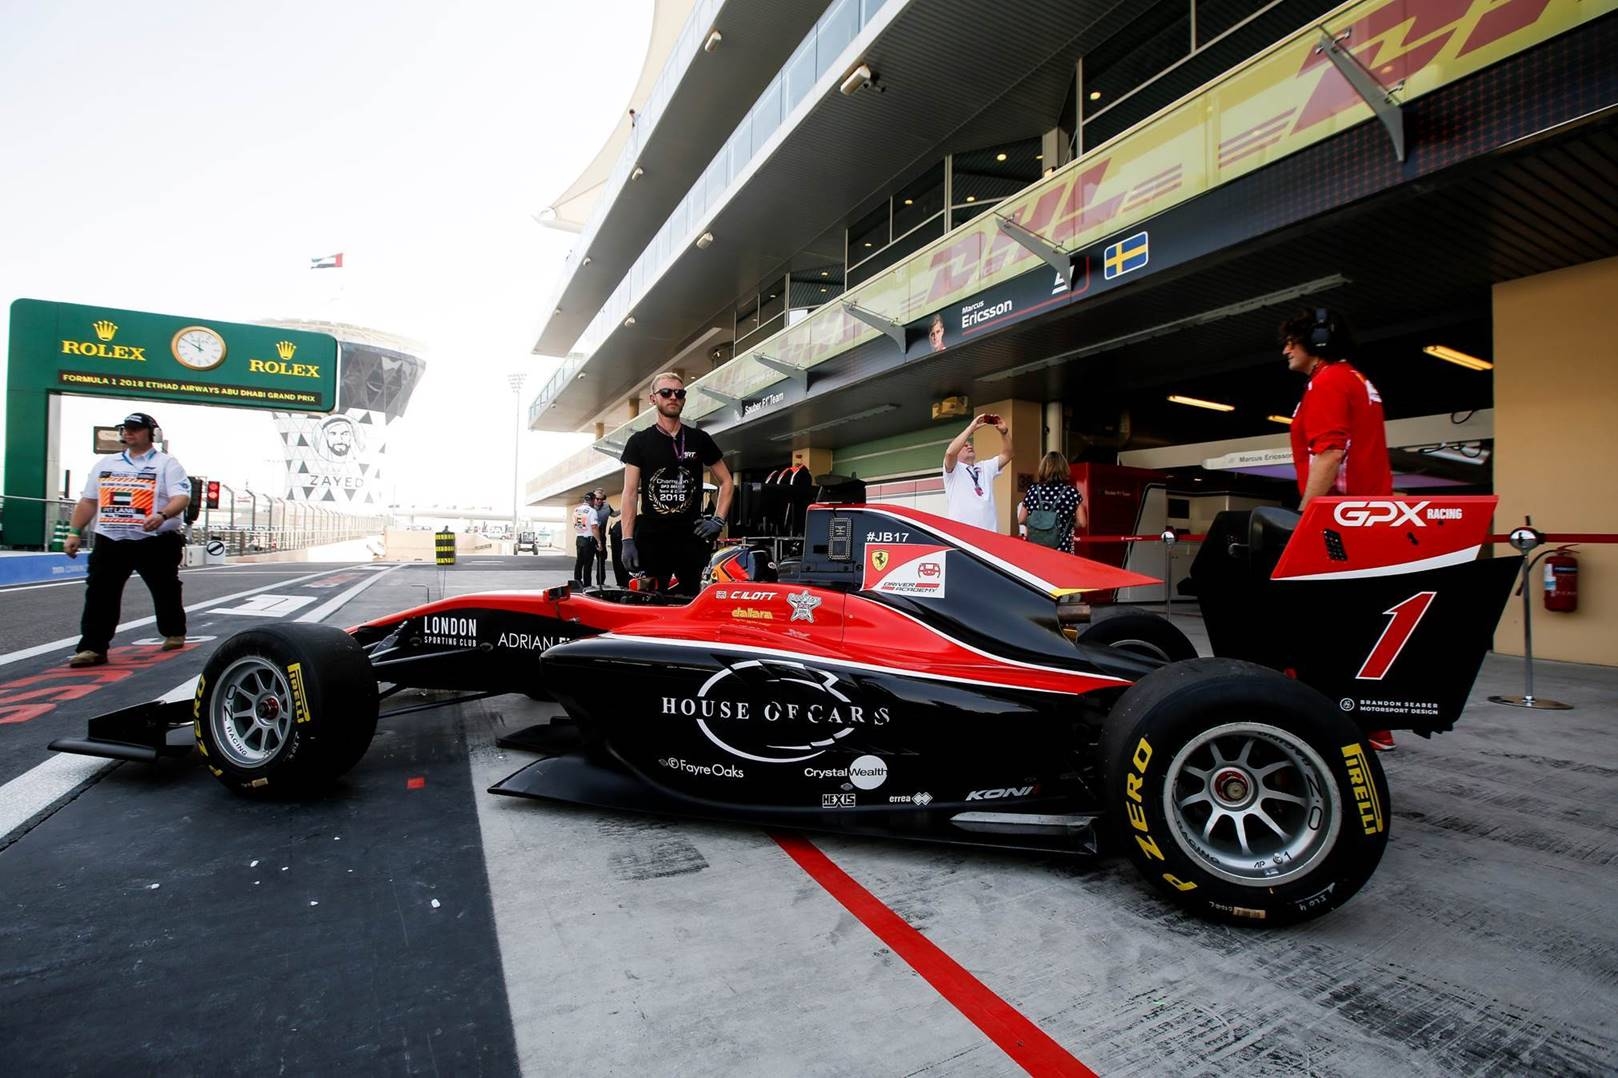 Abu Dhabi, November 24th, Round 9, GP3 Series 2018